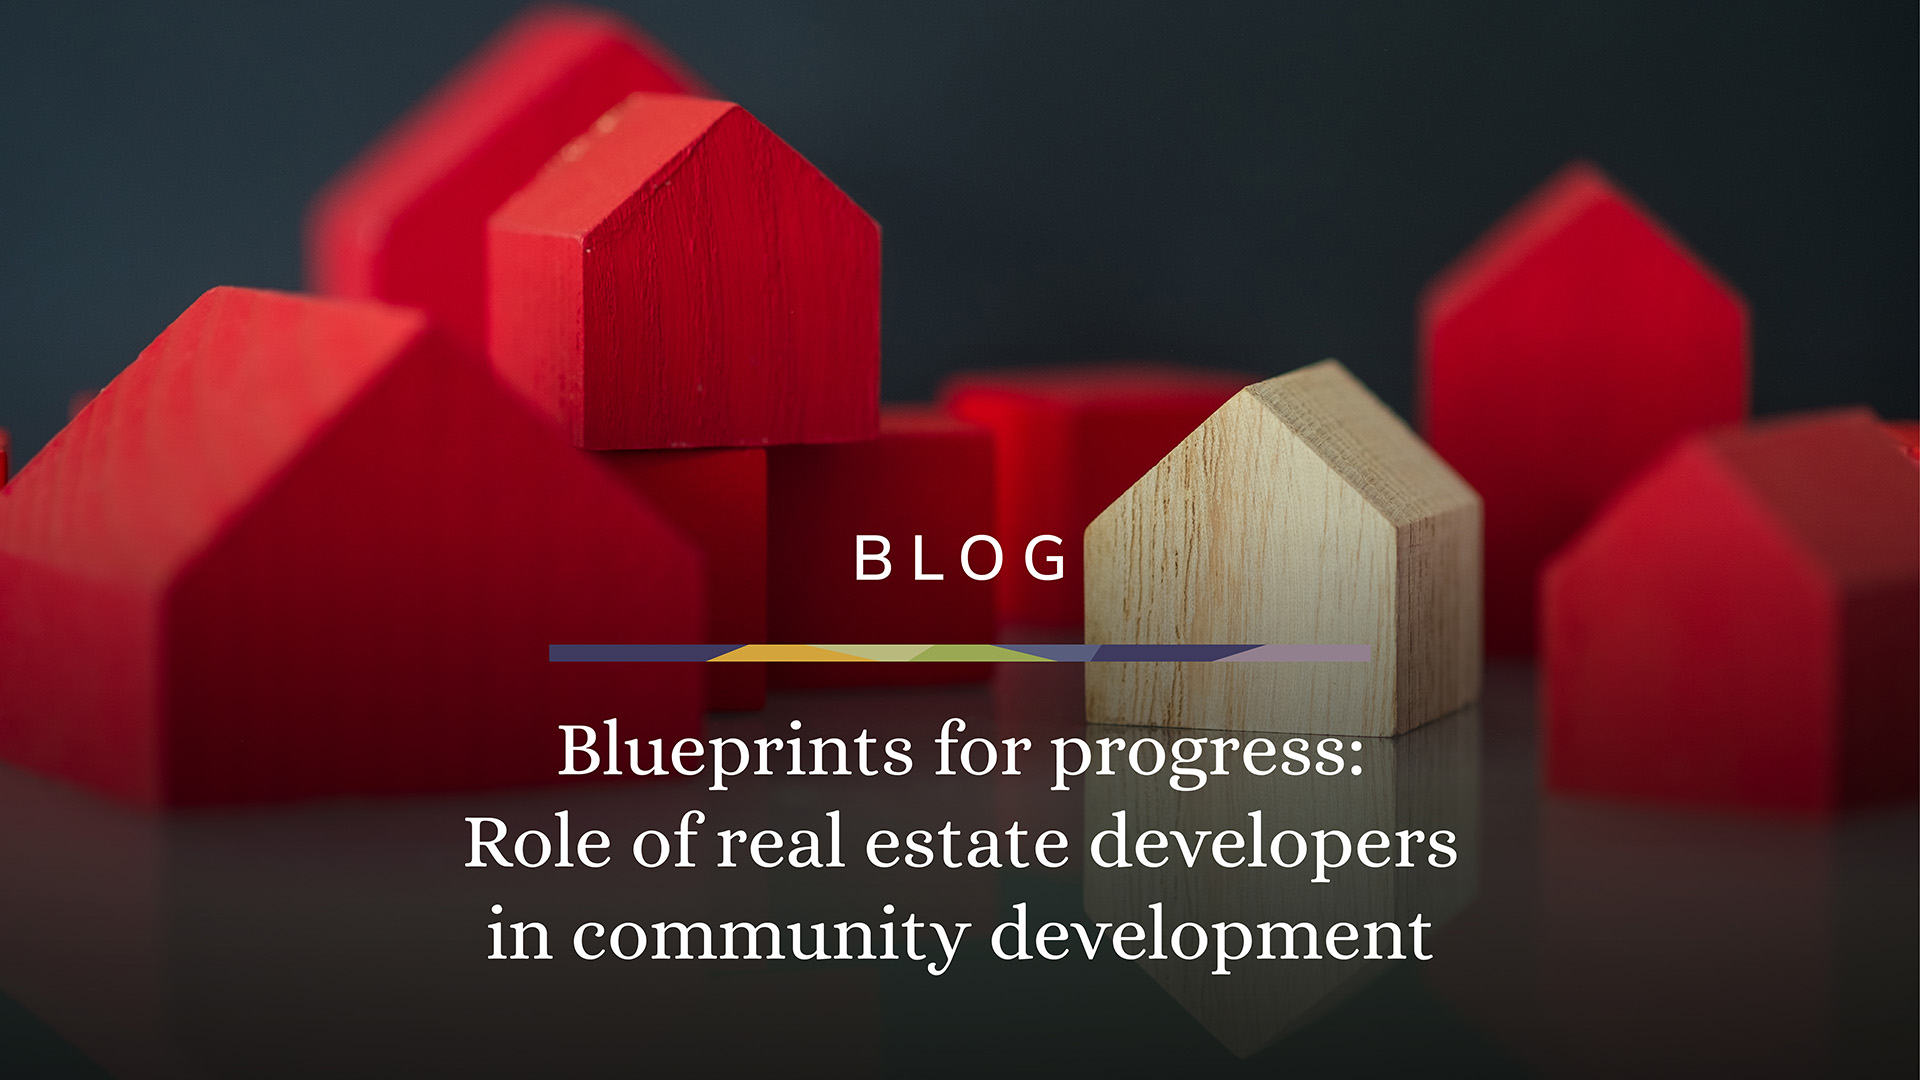 Blueprints for progress: Role of real estate developers in community development